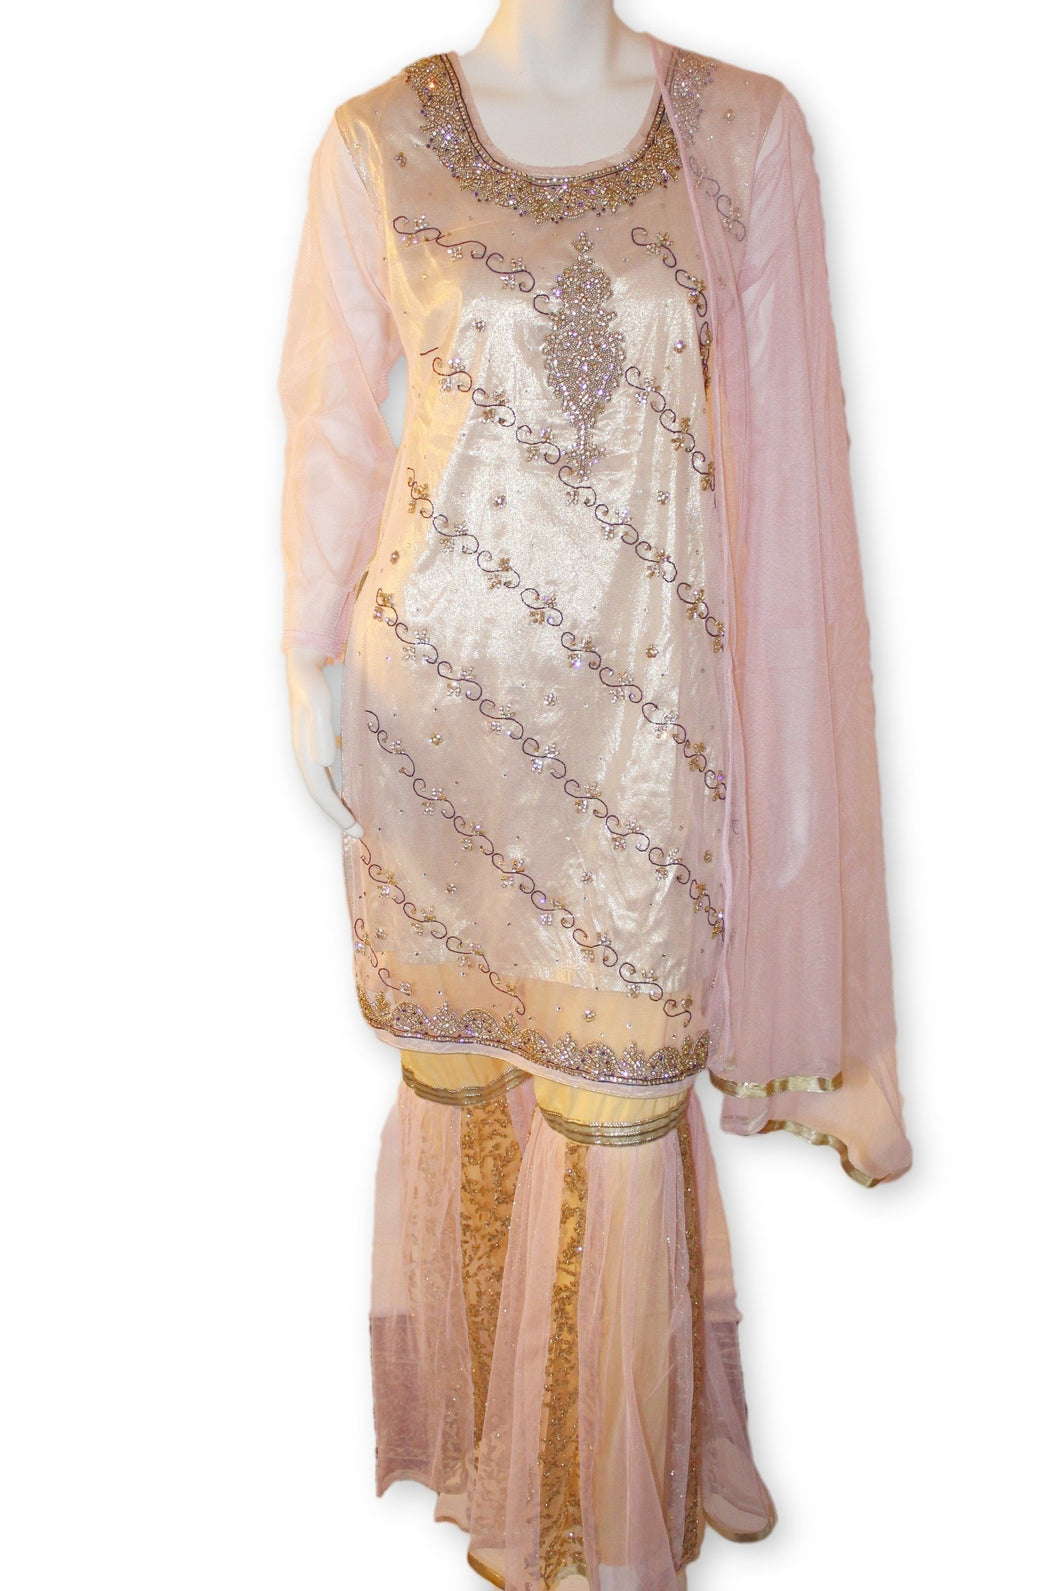 Fancy Net 3 Pcs Gharara Suit Party Wear Pakistani Indian Style